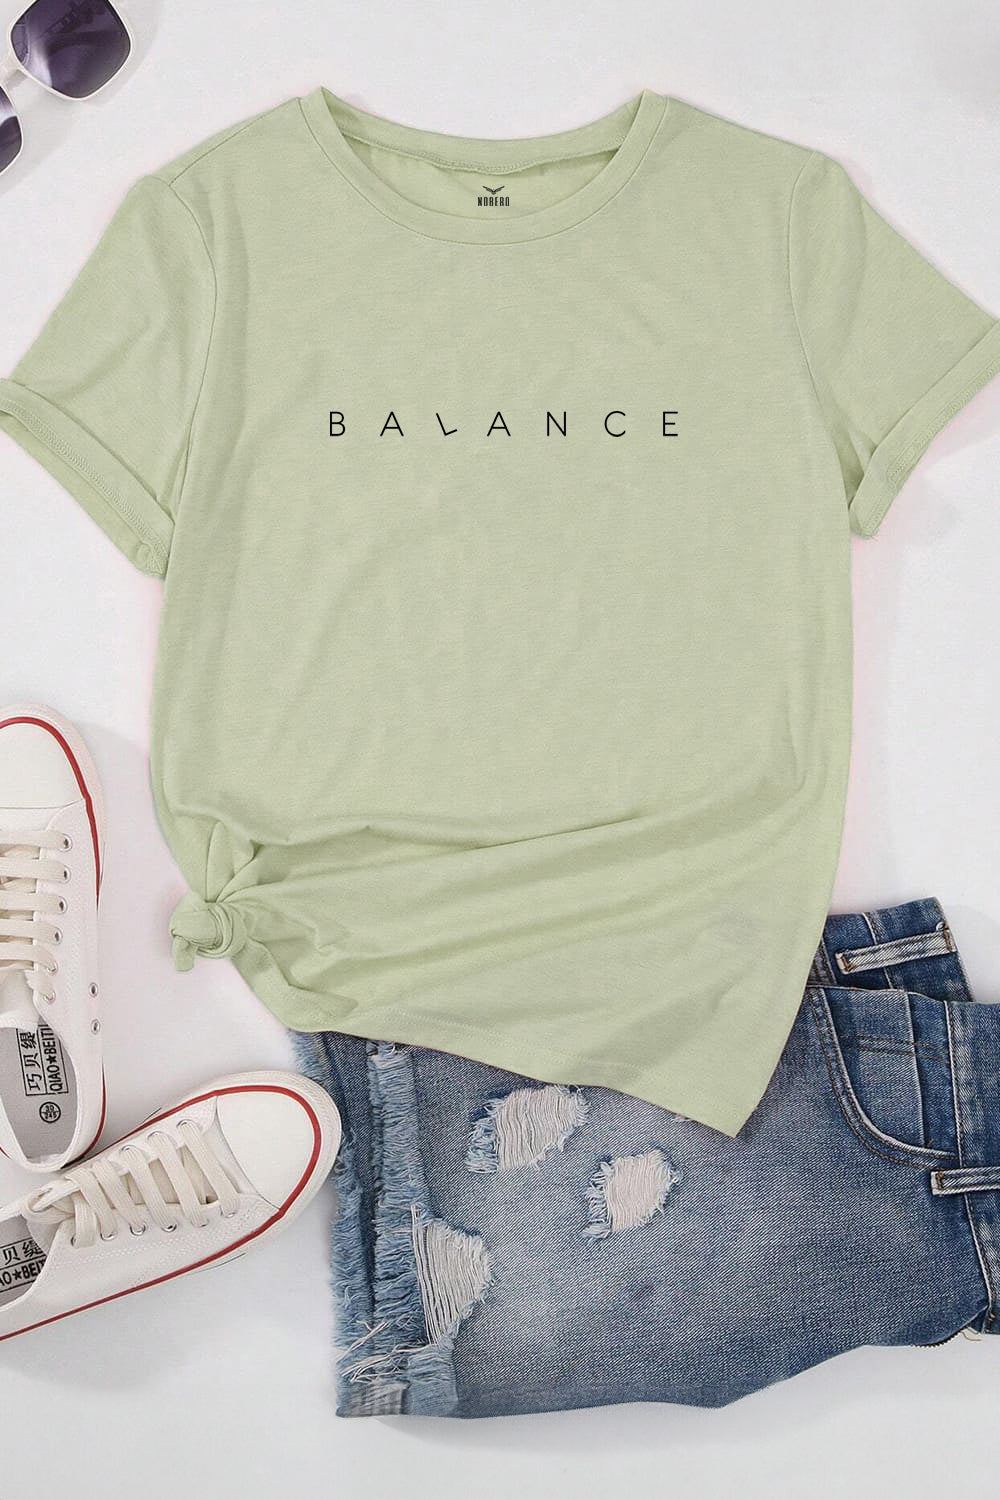 Boyfriend Balance Classic Fit T-Shirt